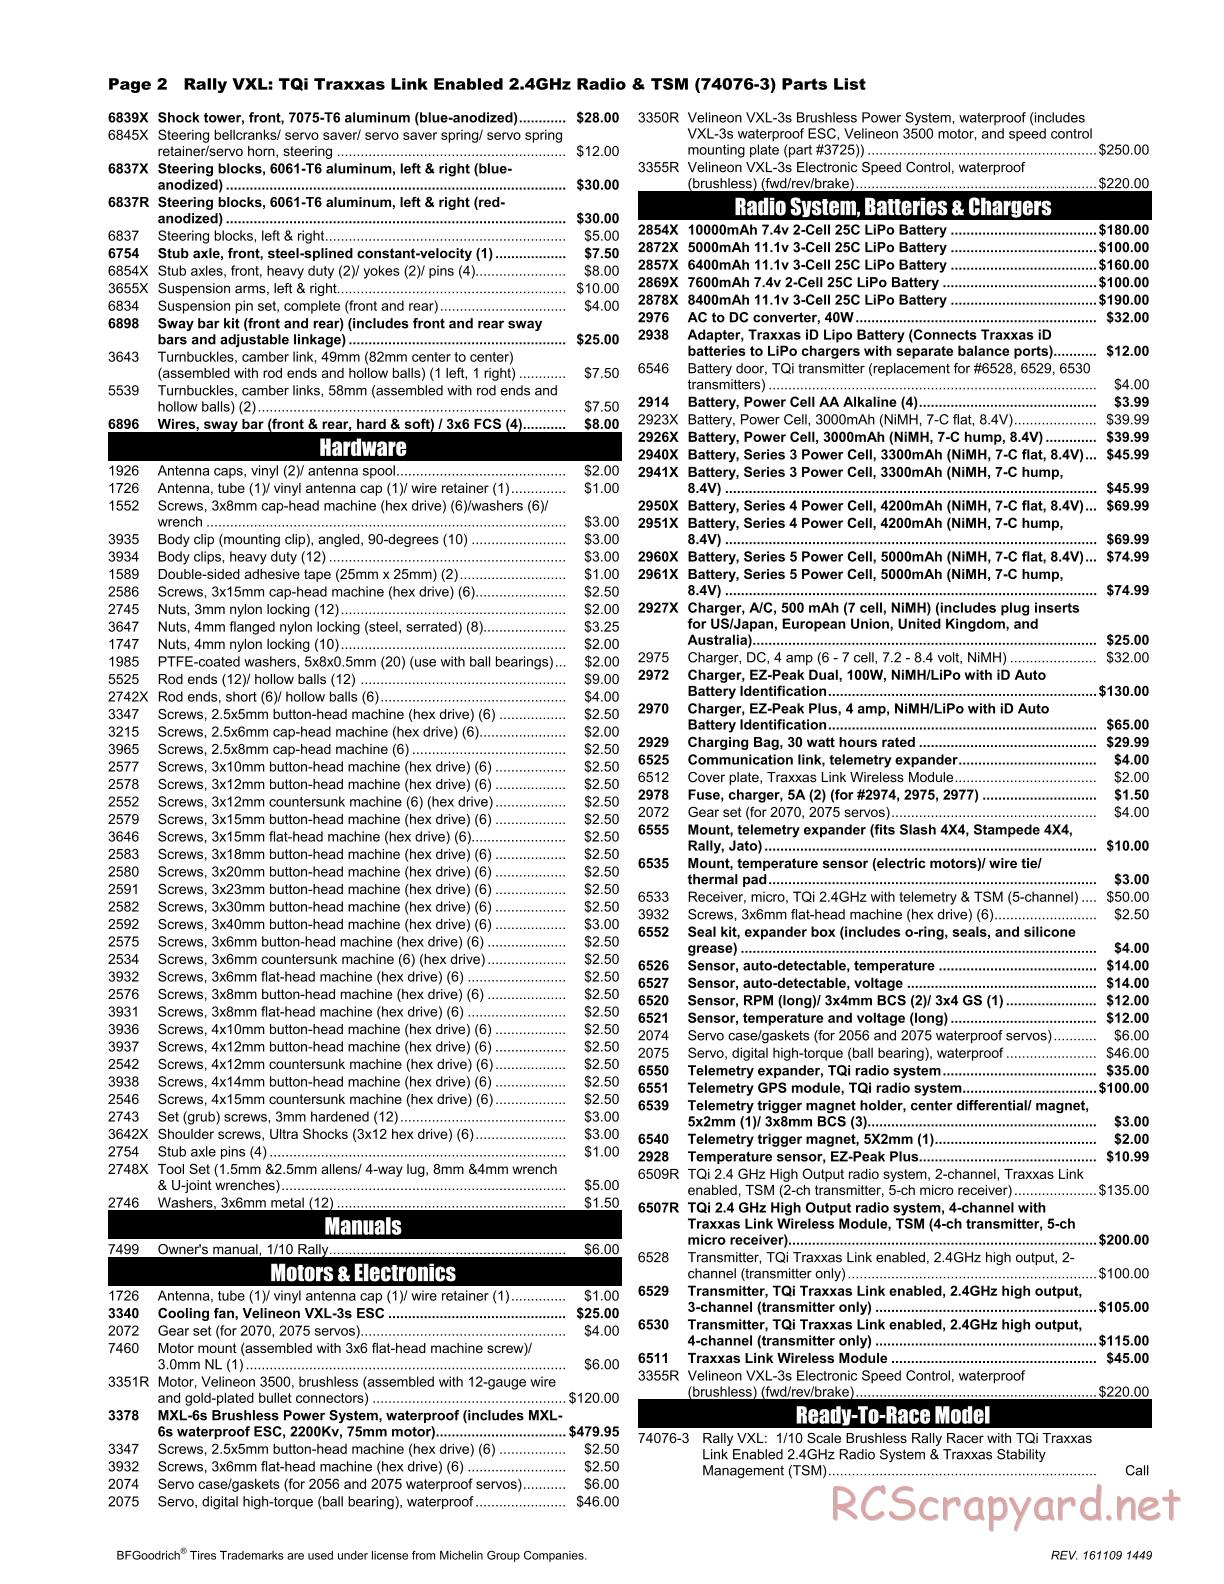 Traxxas - Rally TSM (2016) - Parts List - Page 2